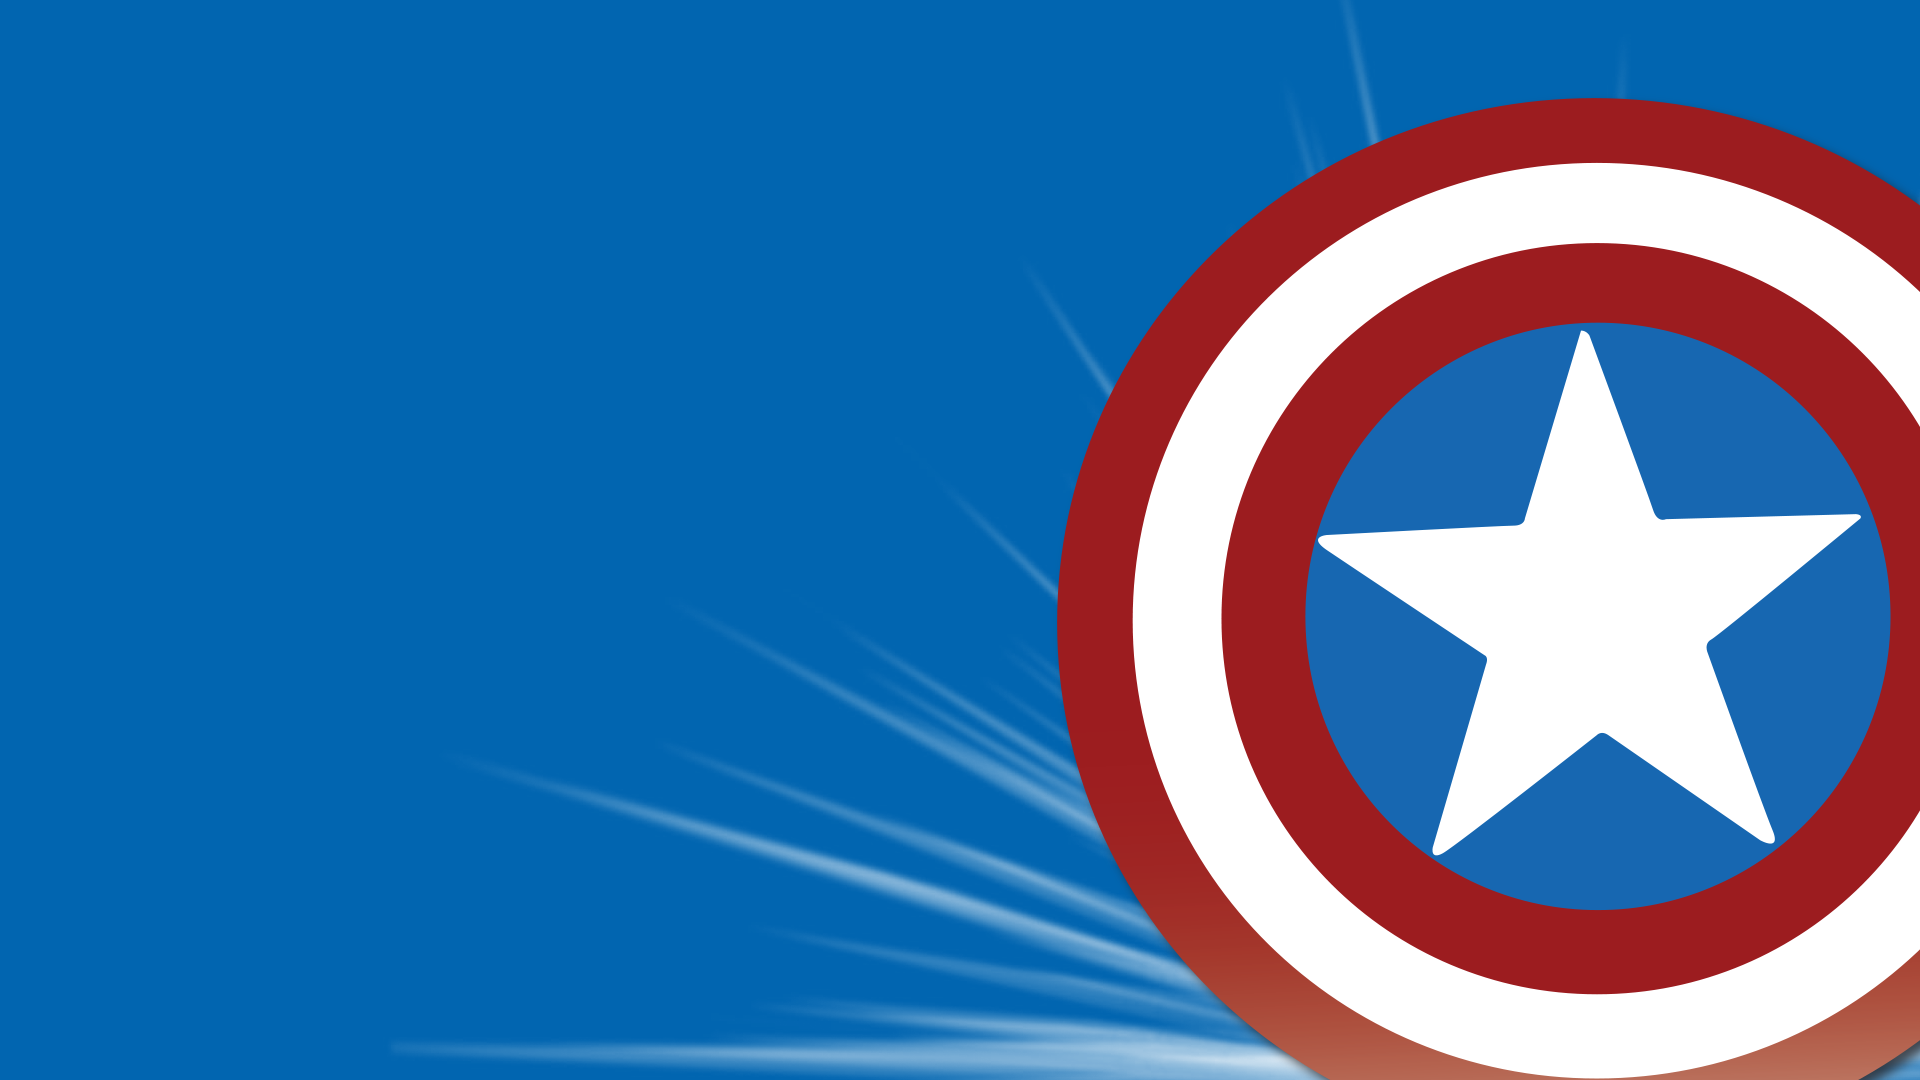 Captain America Background. Captain America Wallpaper, America Wallpaper and Travel America Wallpaper